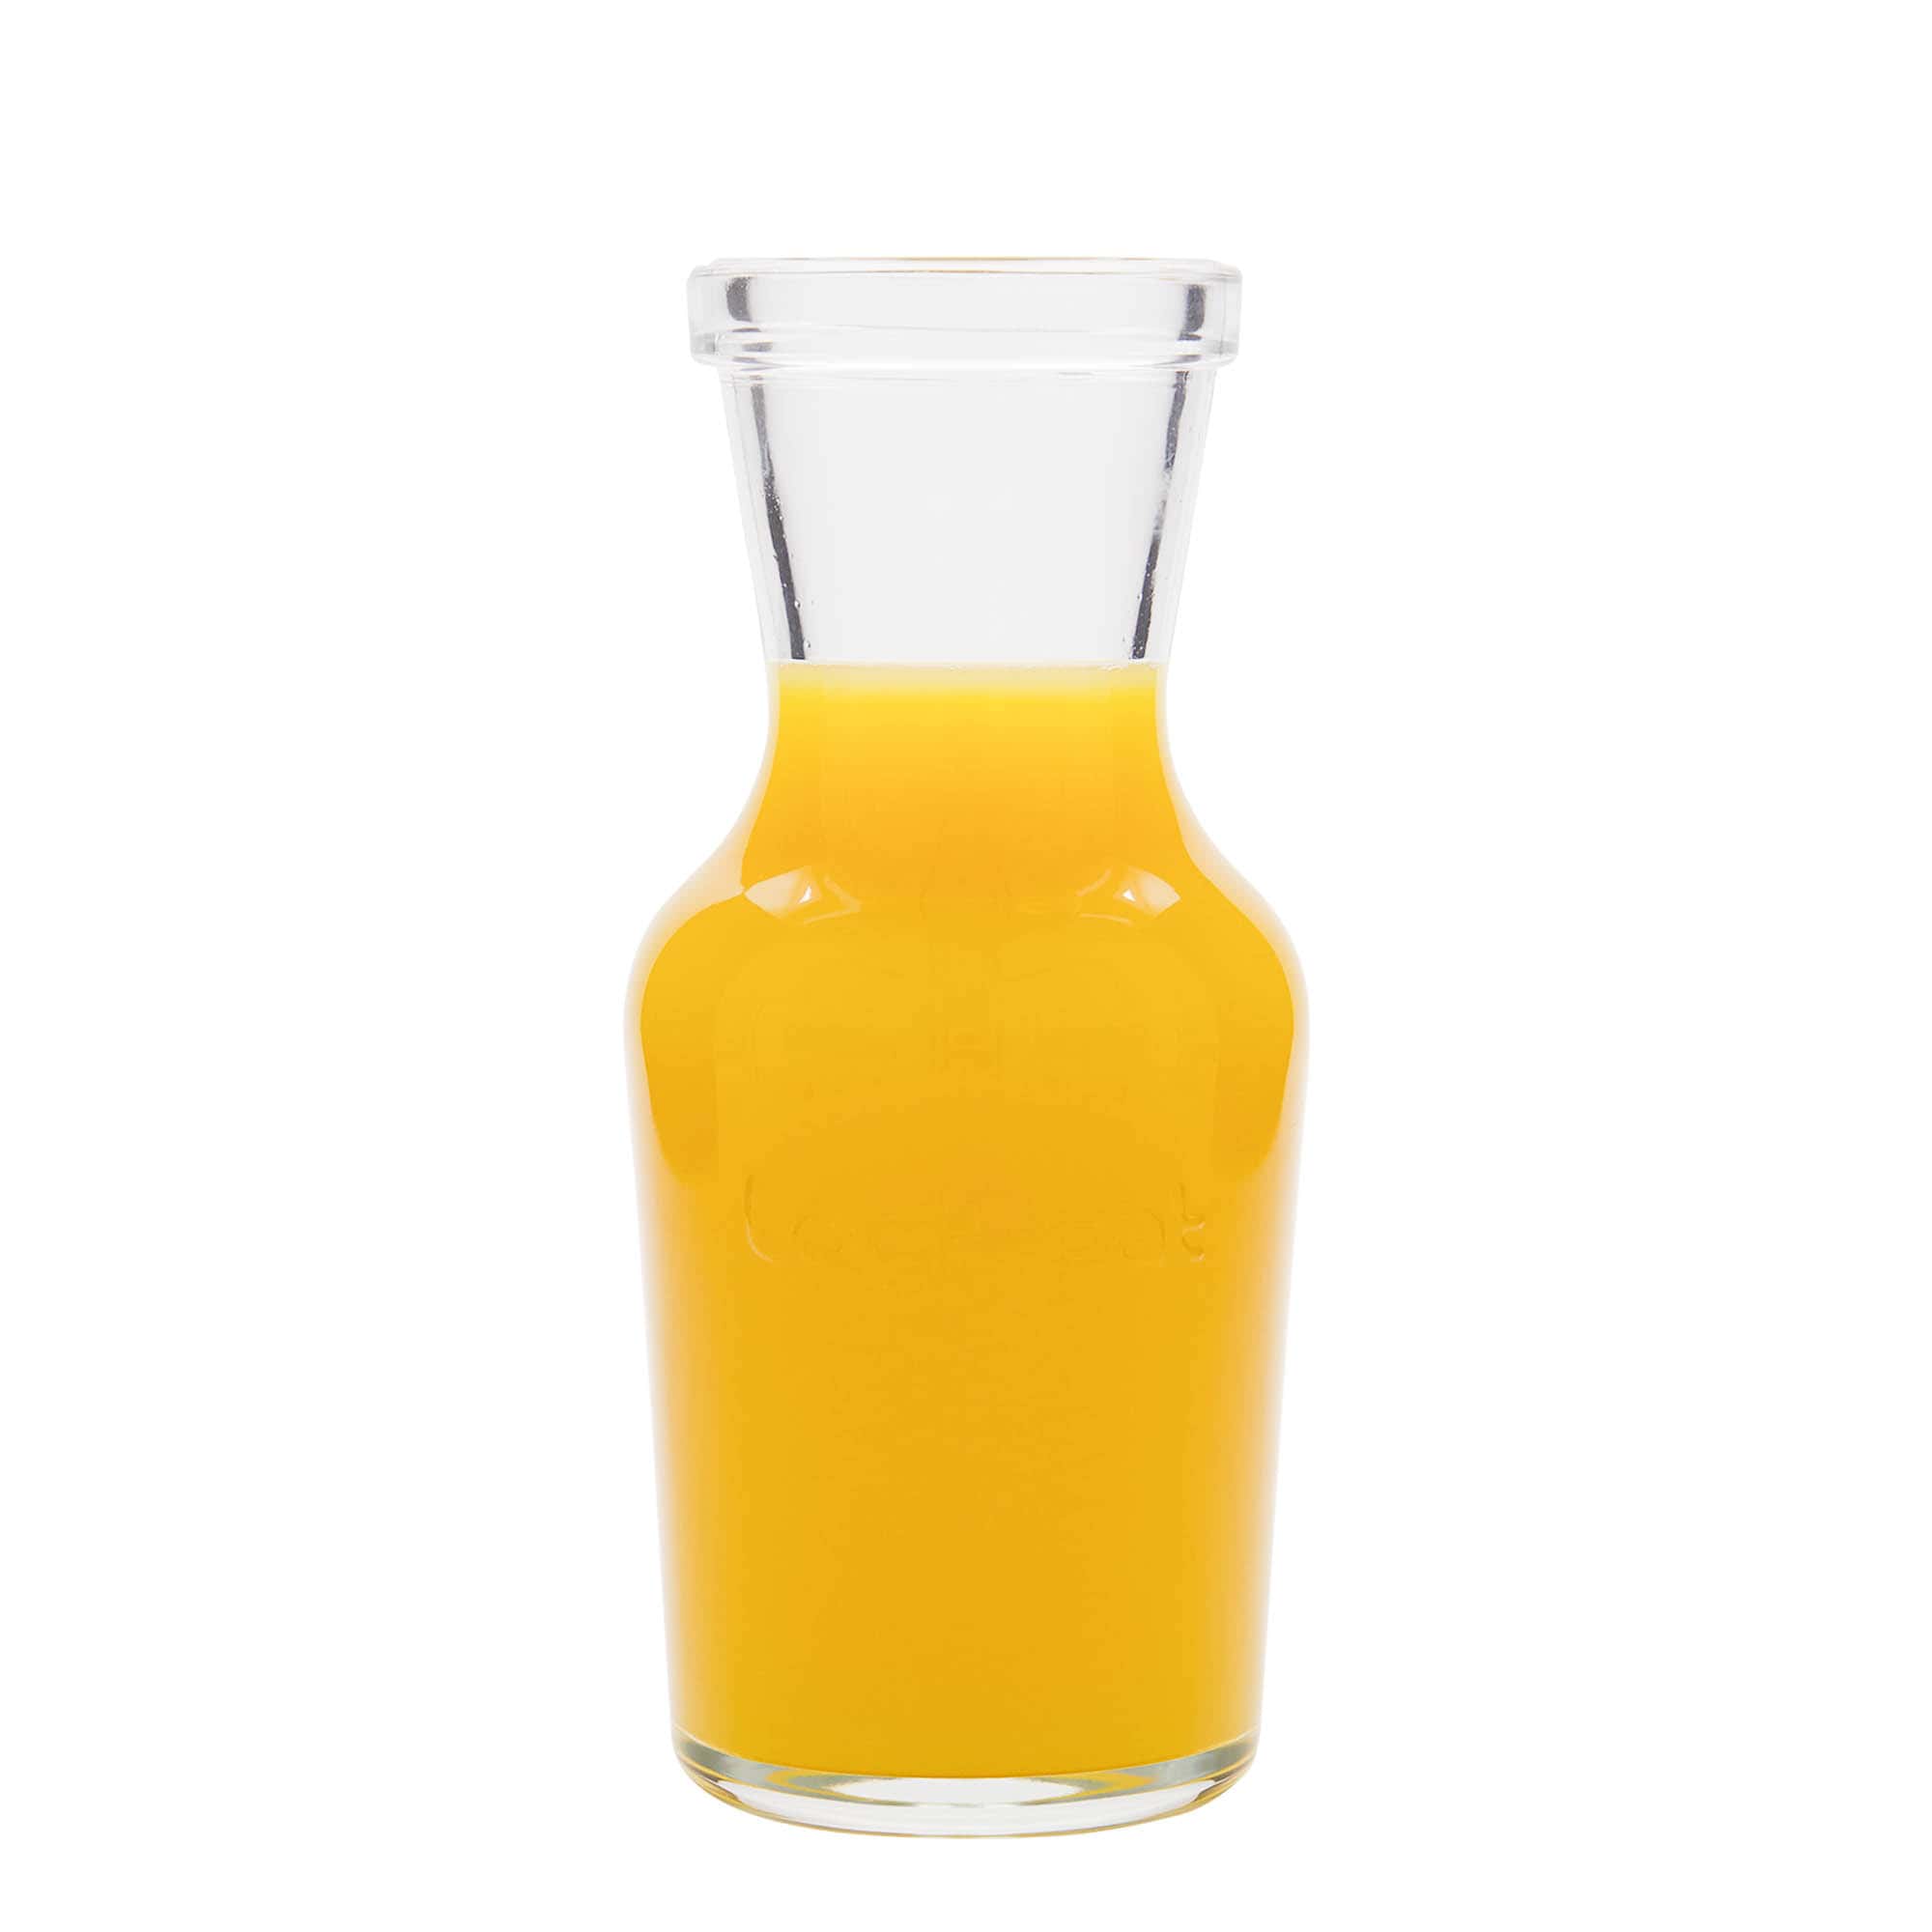 500 ml glass carafe 'Lock-Eat', closure: clip top